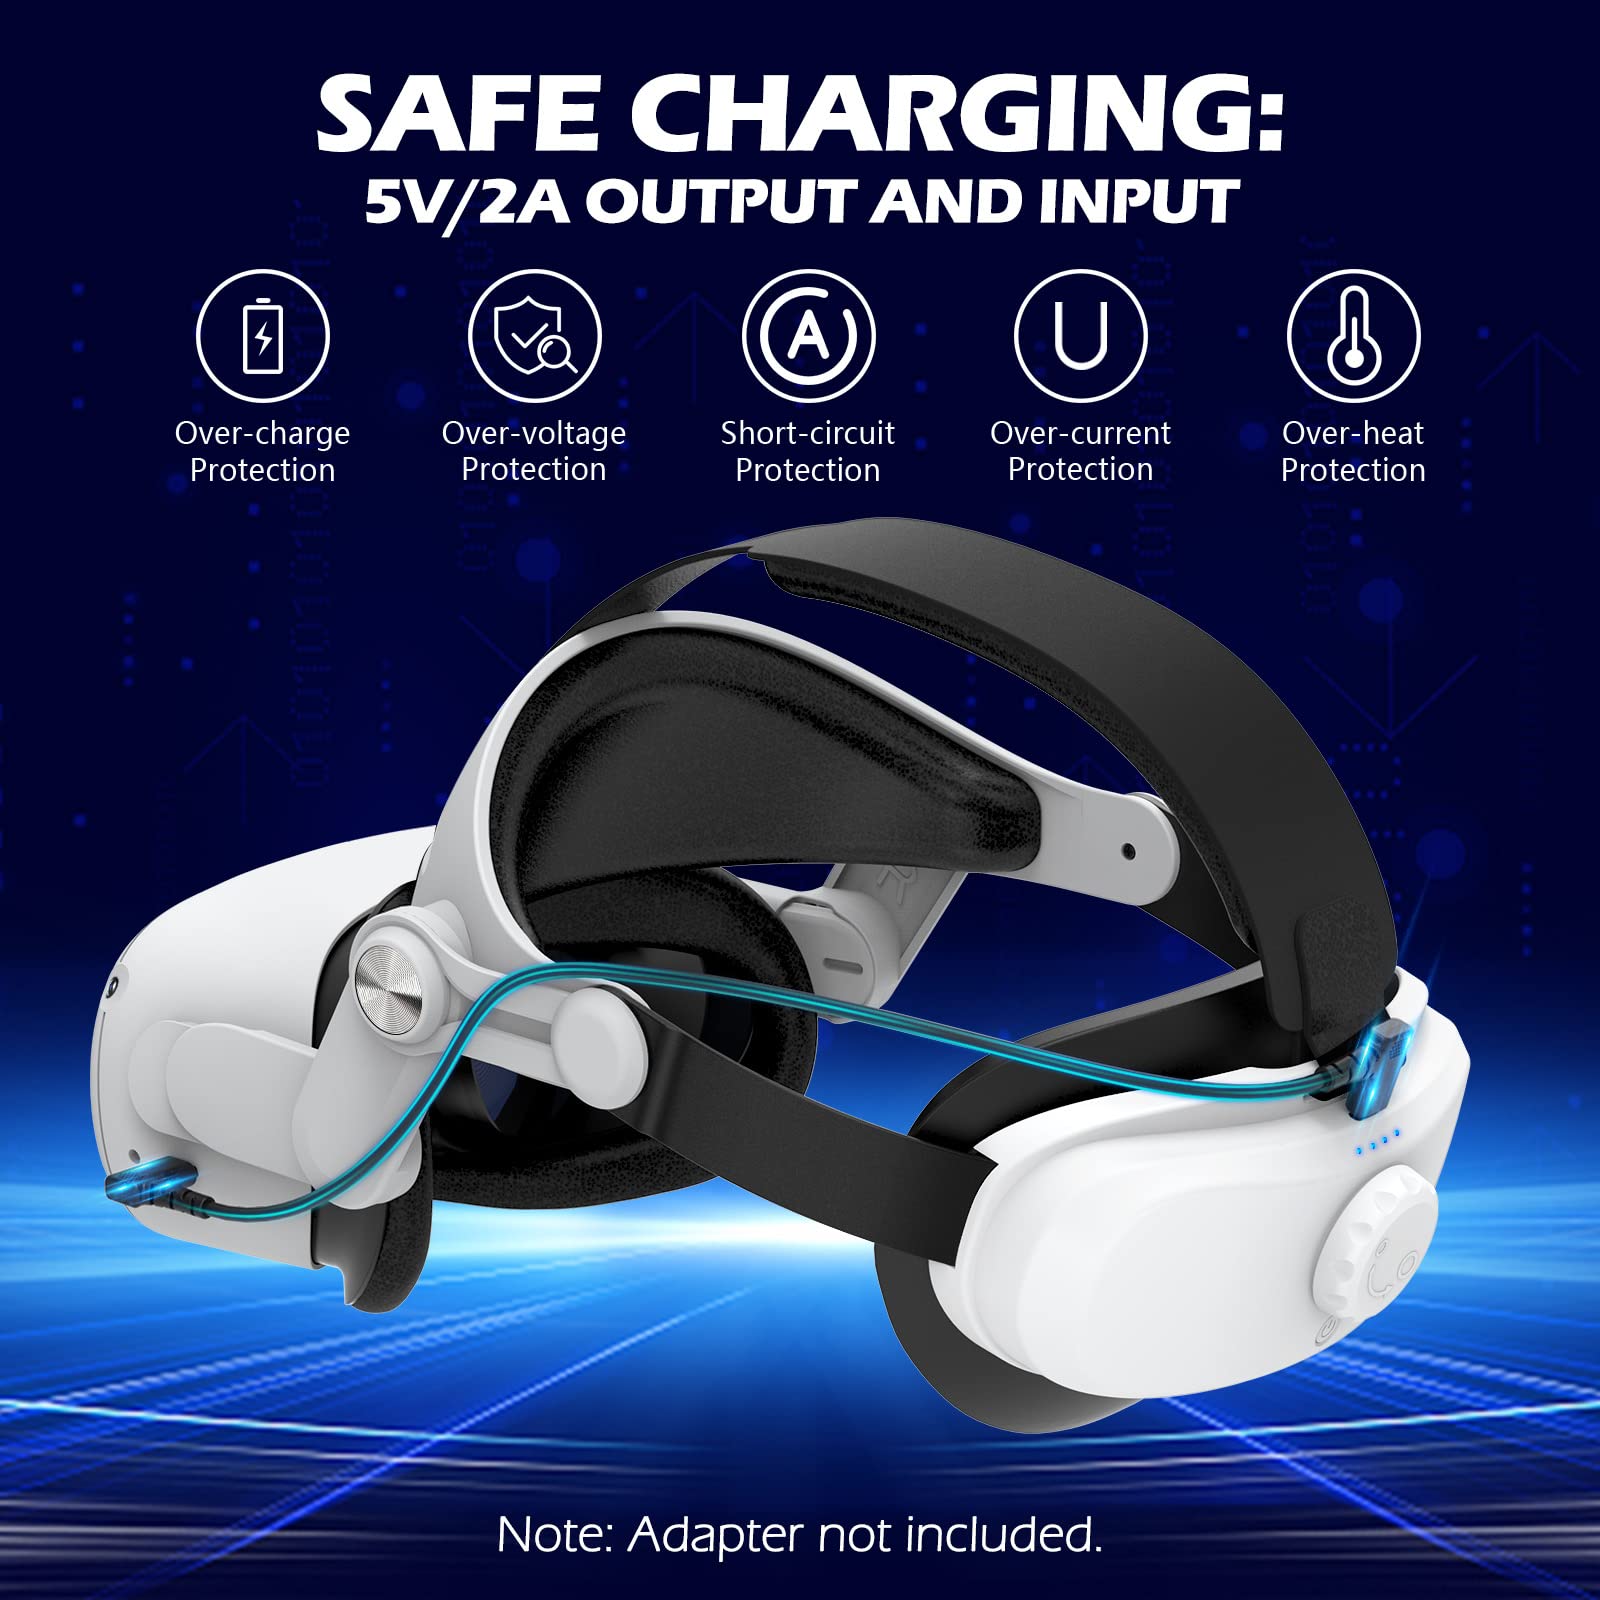 Adjustable Head Strap Bundle for Meta Oculus Quest 2 VR Headset